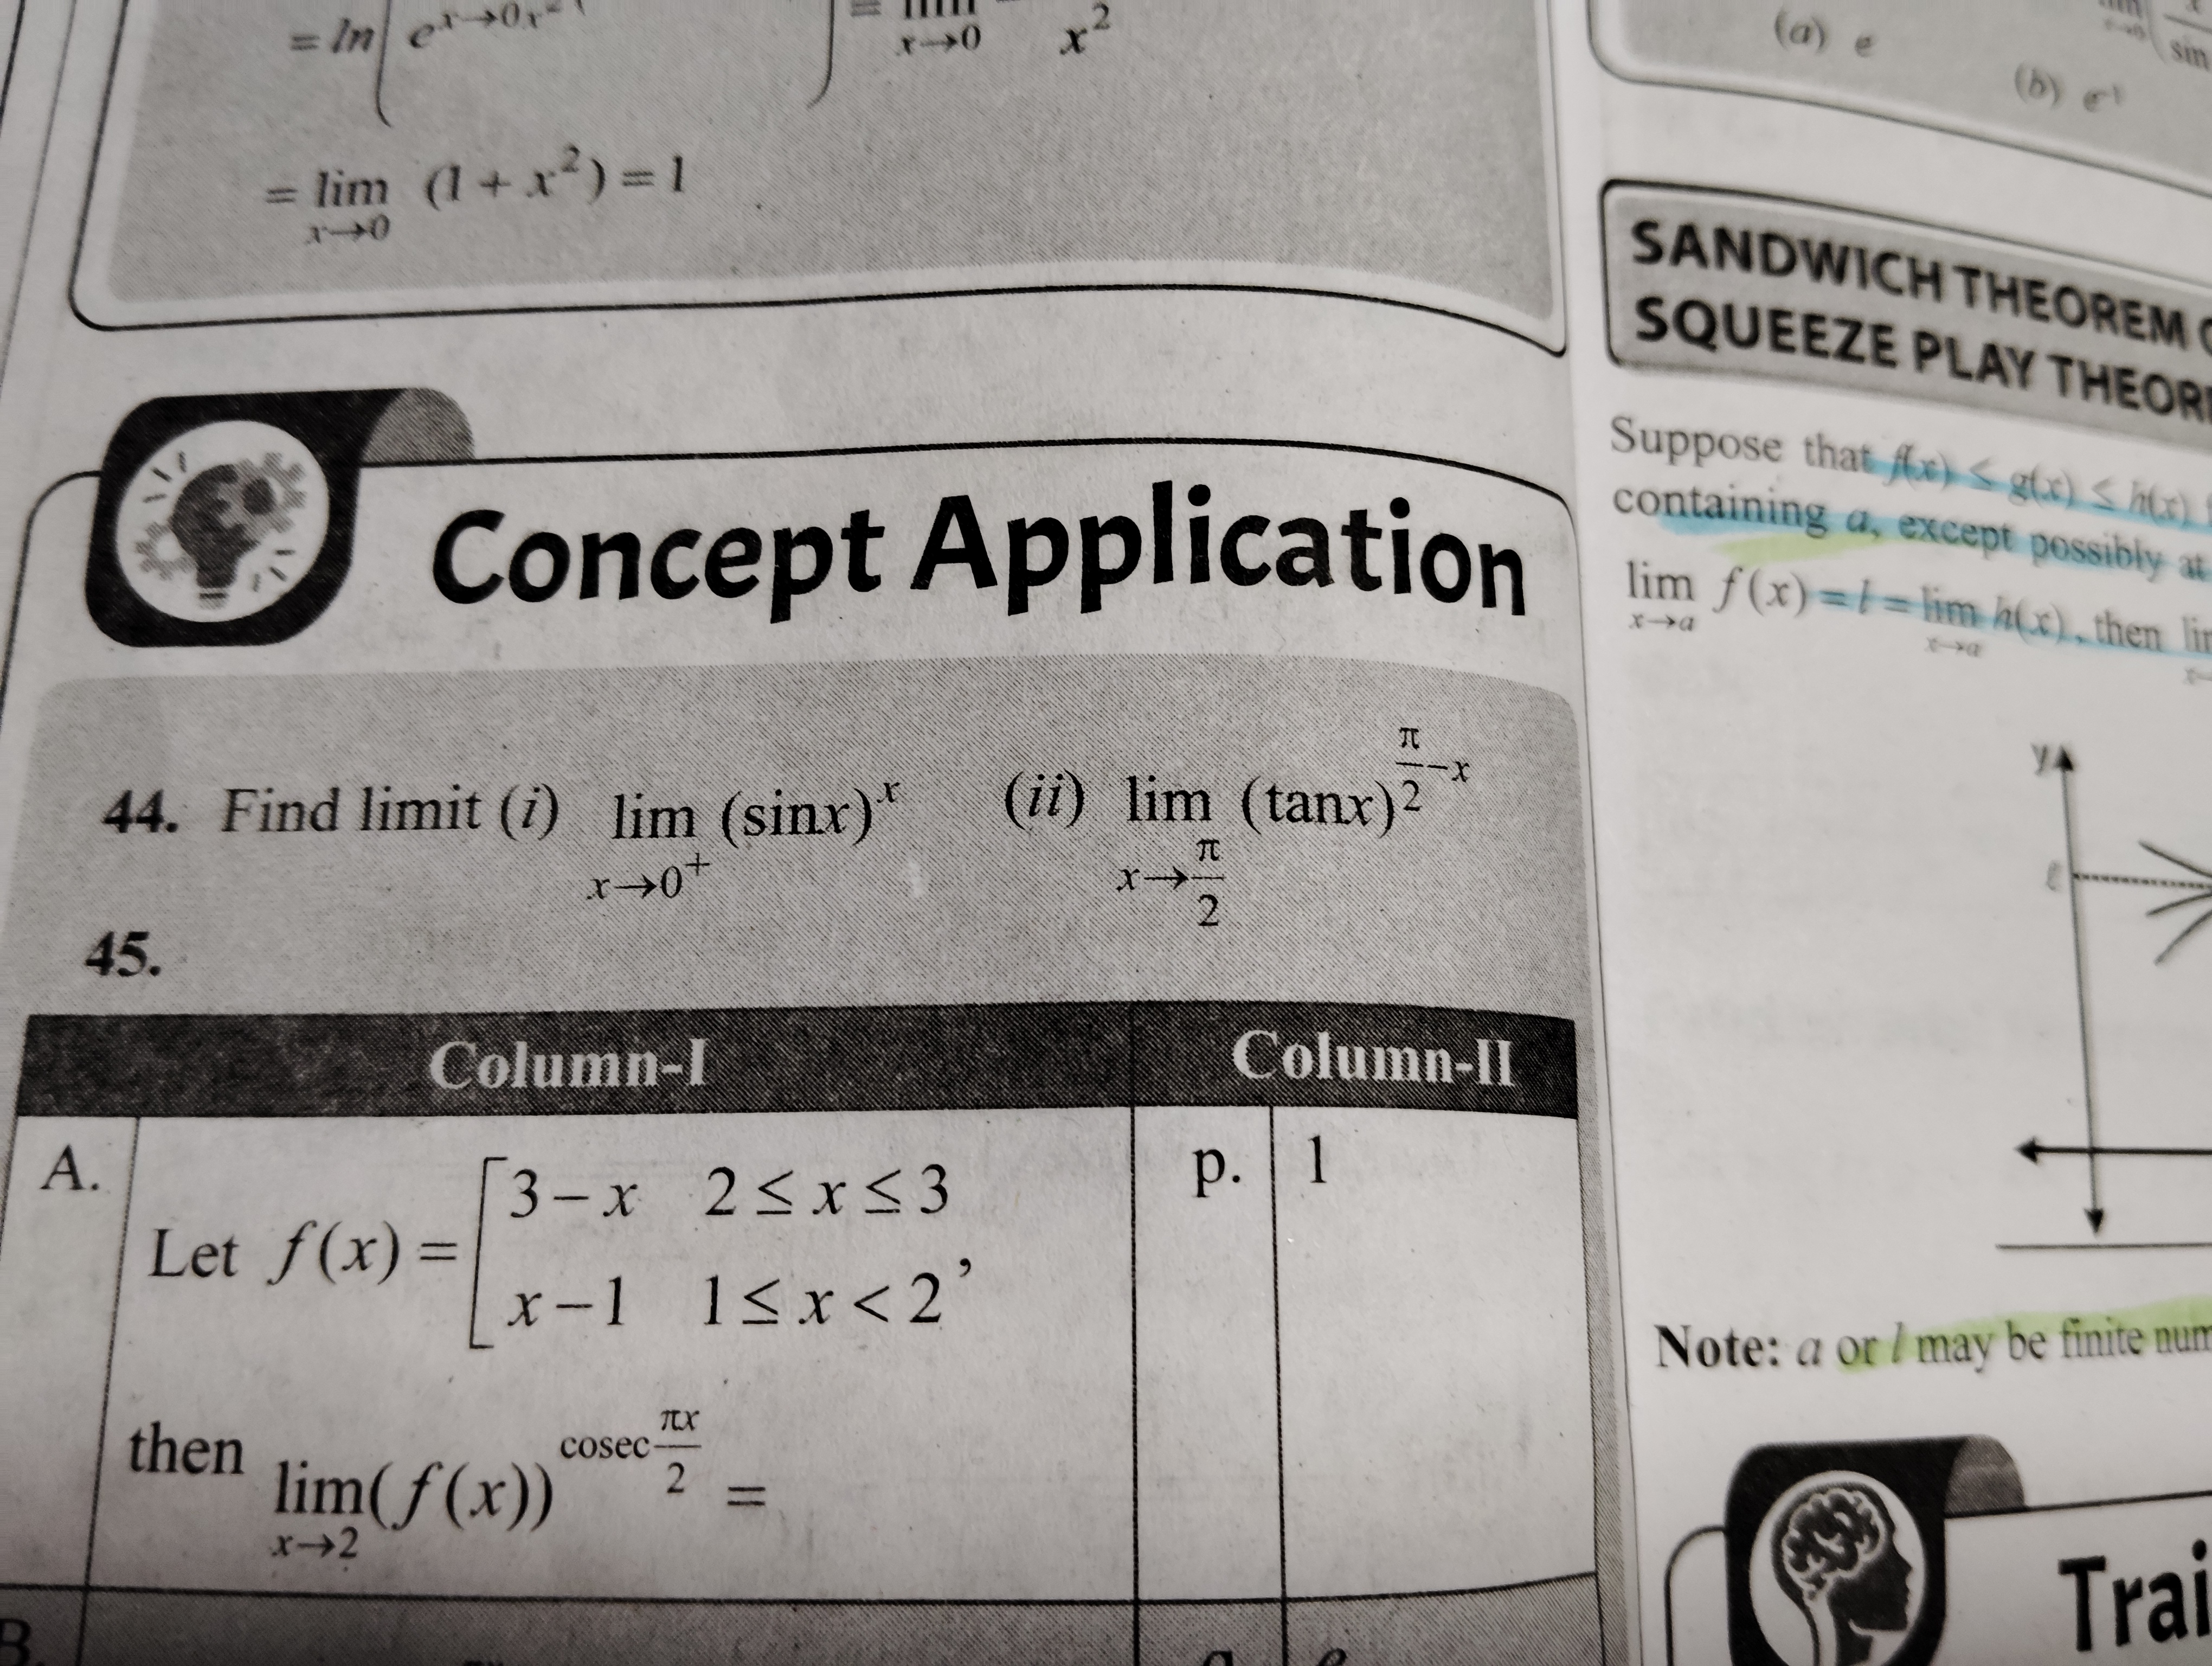 Concept Application
44. Find limit (i)limx→0+​(sinx)x 45.
=limx→0​(1+x